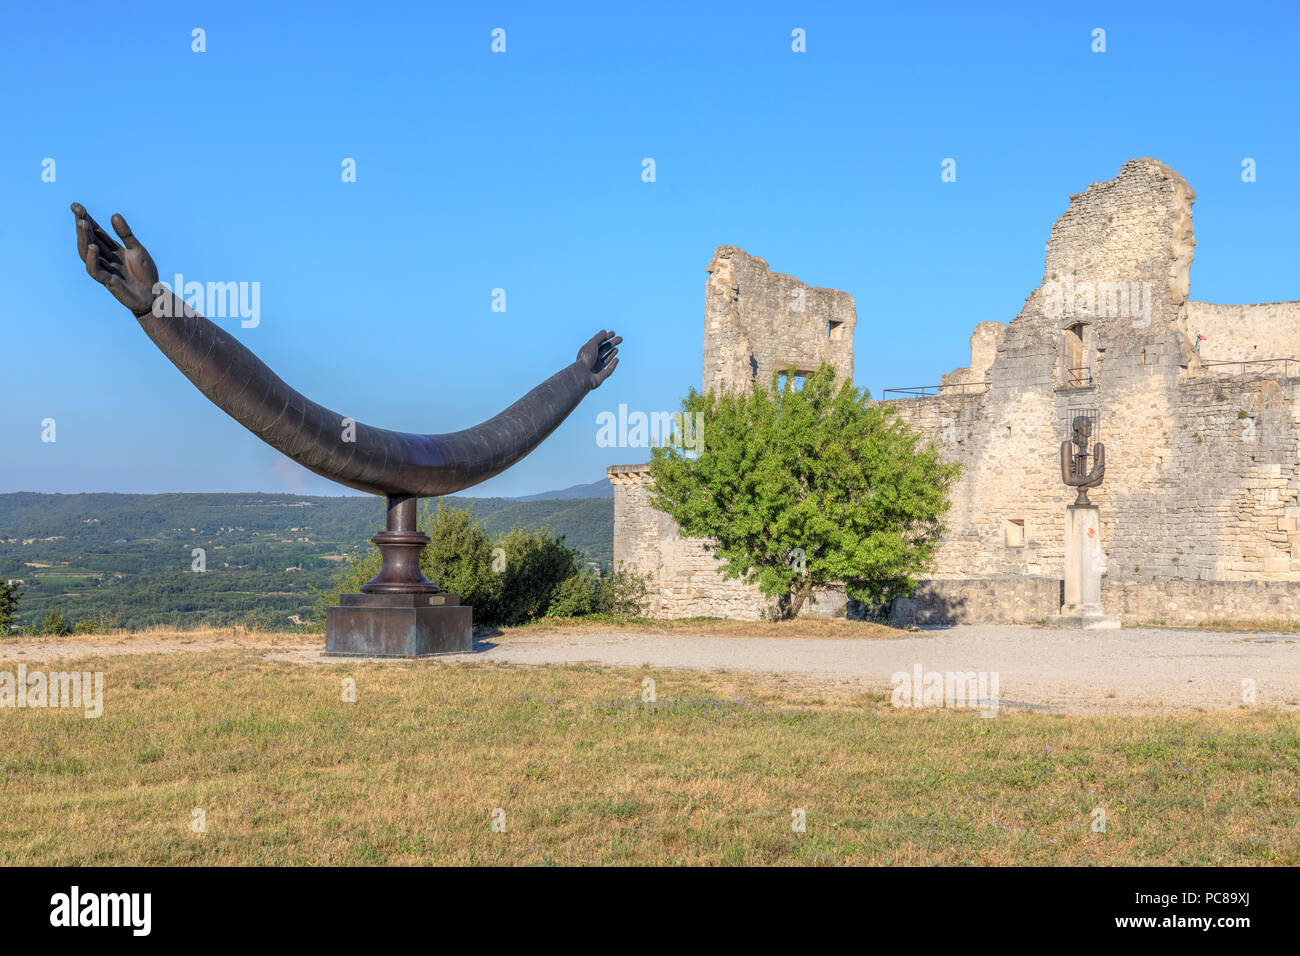 Chateau de Lacoste, Lacoste, Apt, Provence, France Stock Photo - Alamy